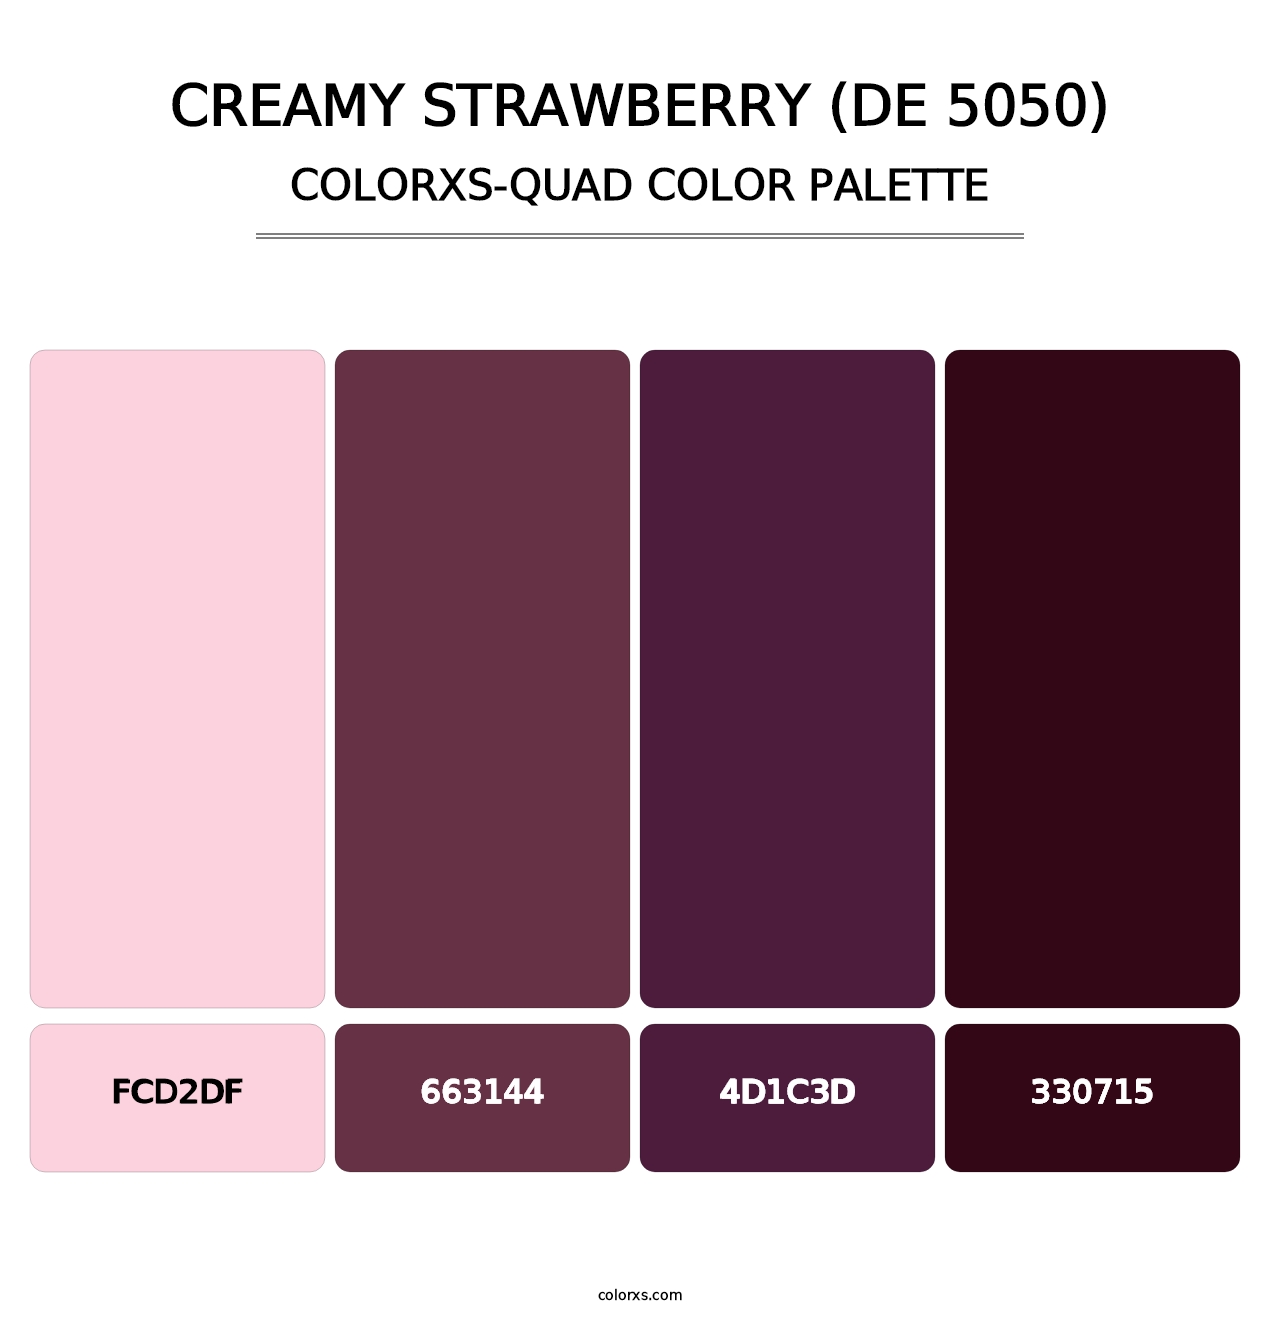 Creamy Strawberry (DE 5050) - Colorxs Quad Palette